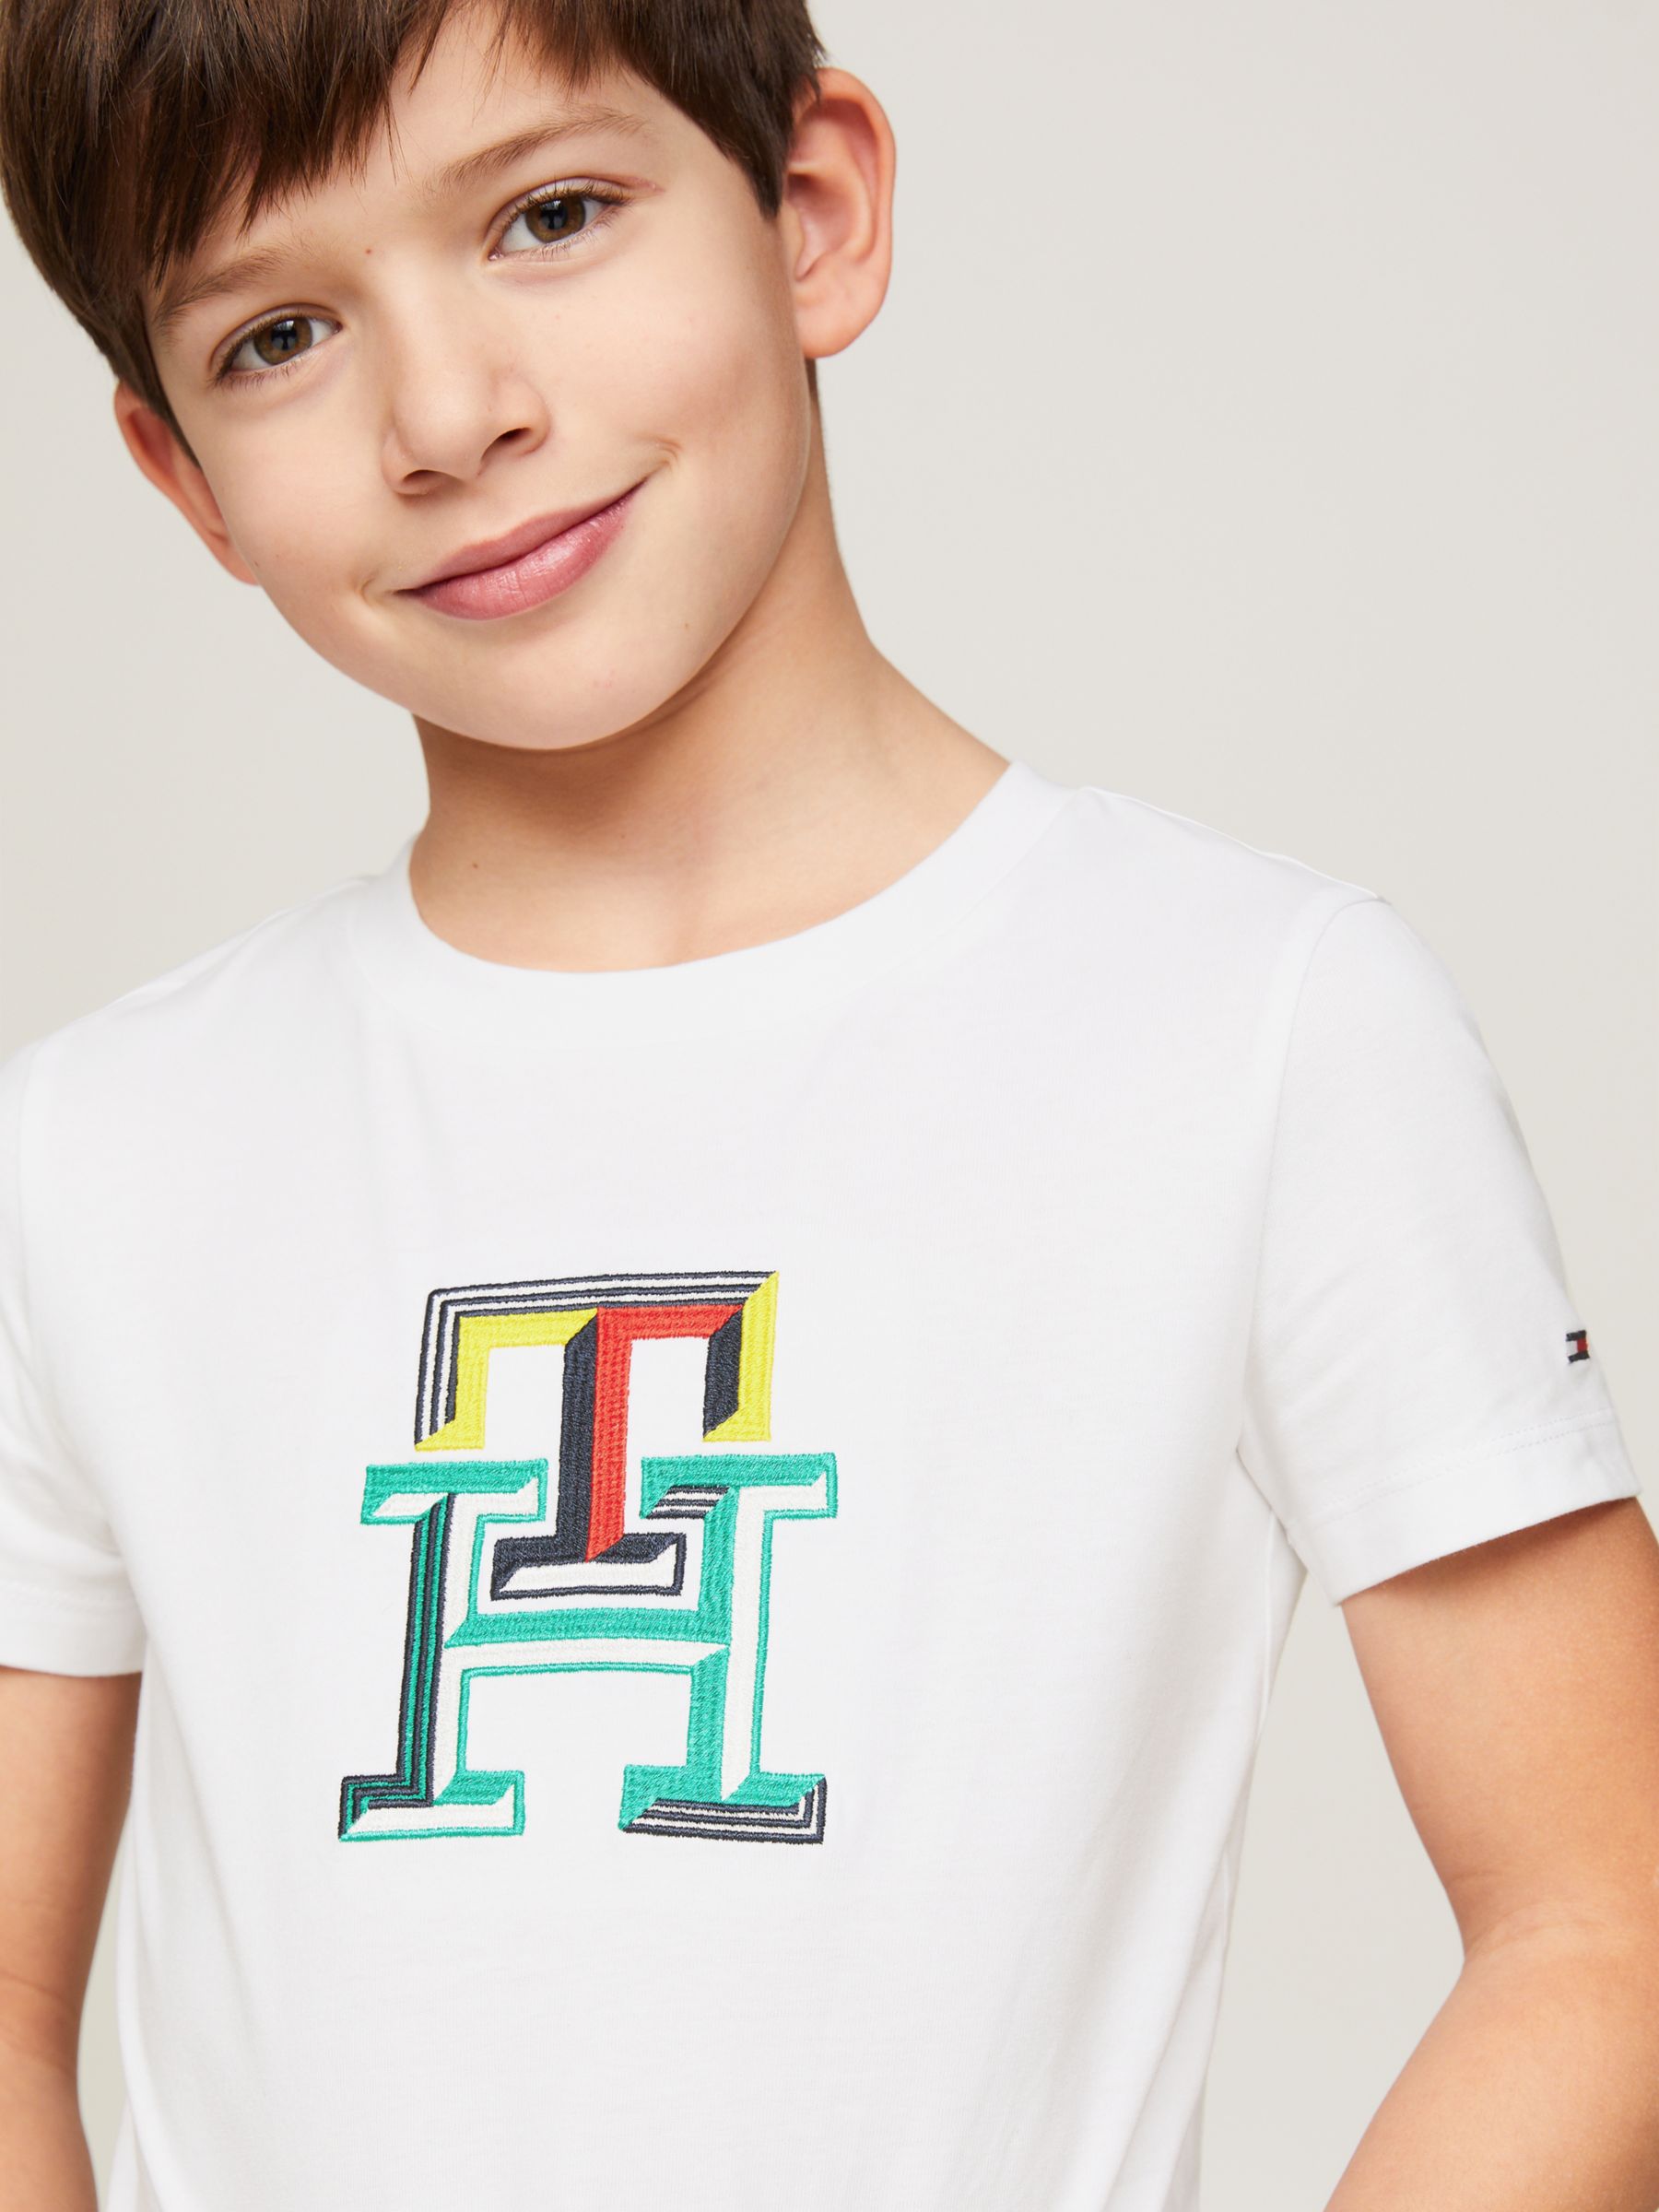 Tommy Hilfiger Kids' Cotton Monogram T-Shirt, White, 14 years